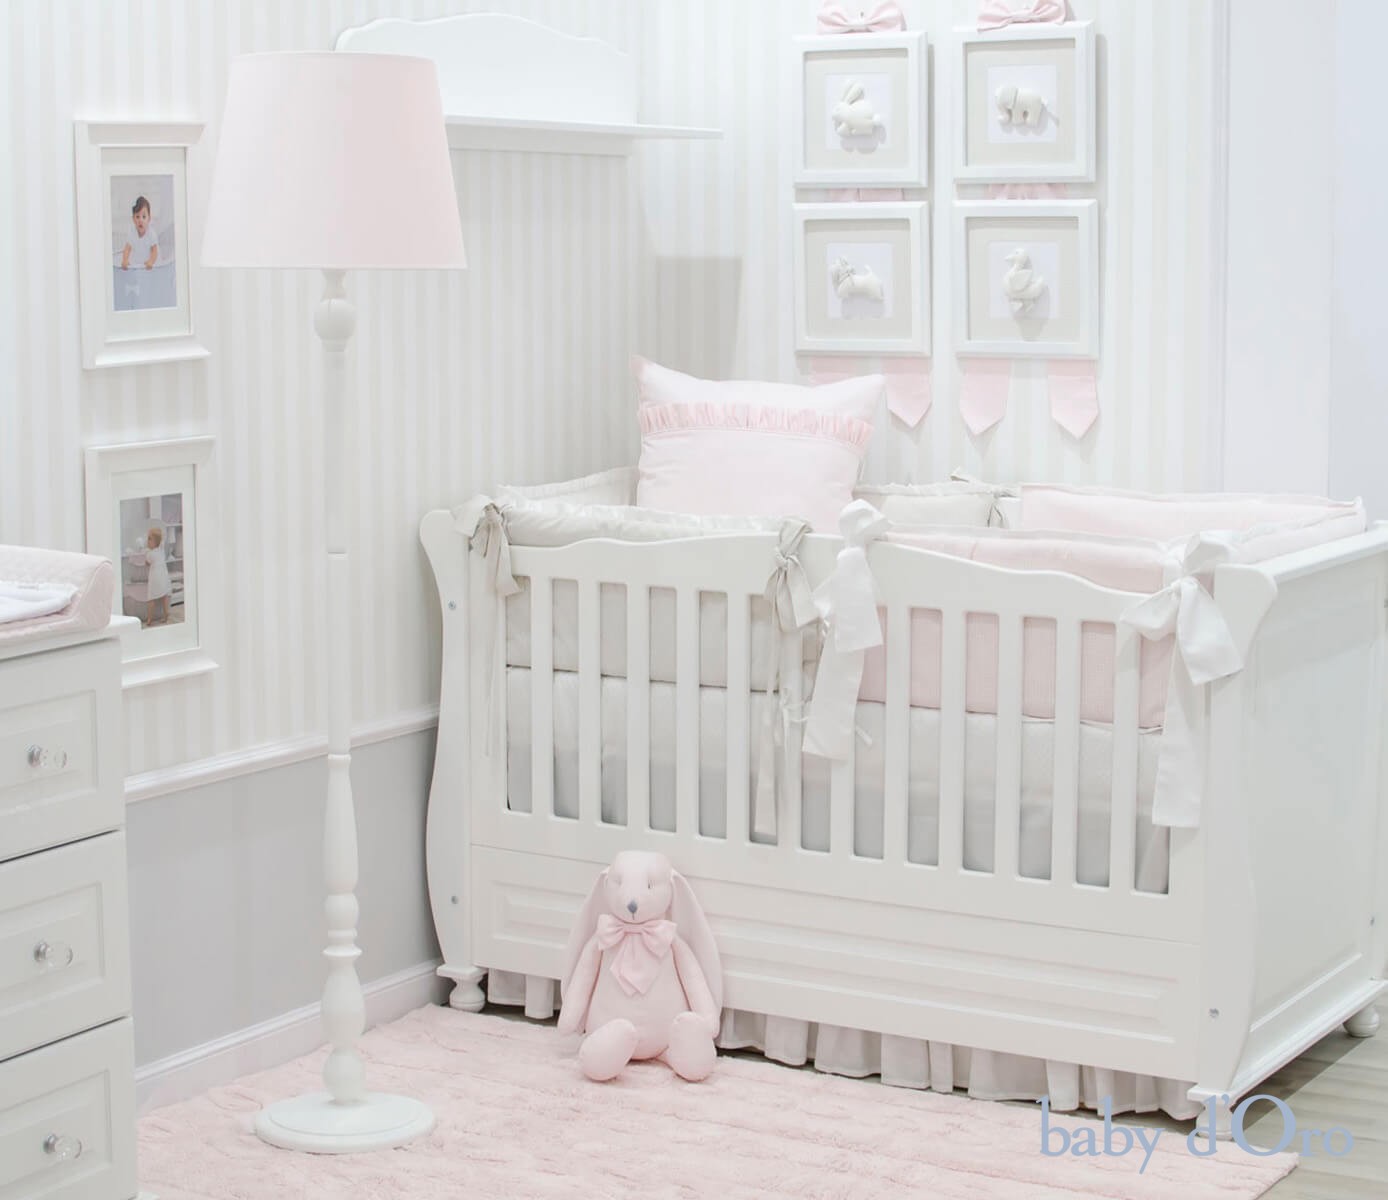 Lea Floor Lamp Cheverny Pink Baby D Oro, Pink Floor Lamp For Nursery